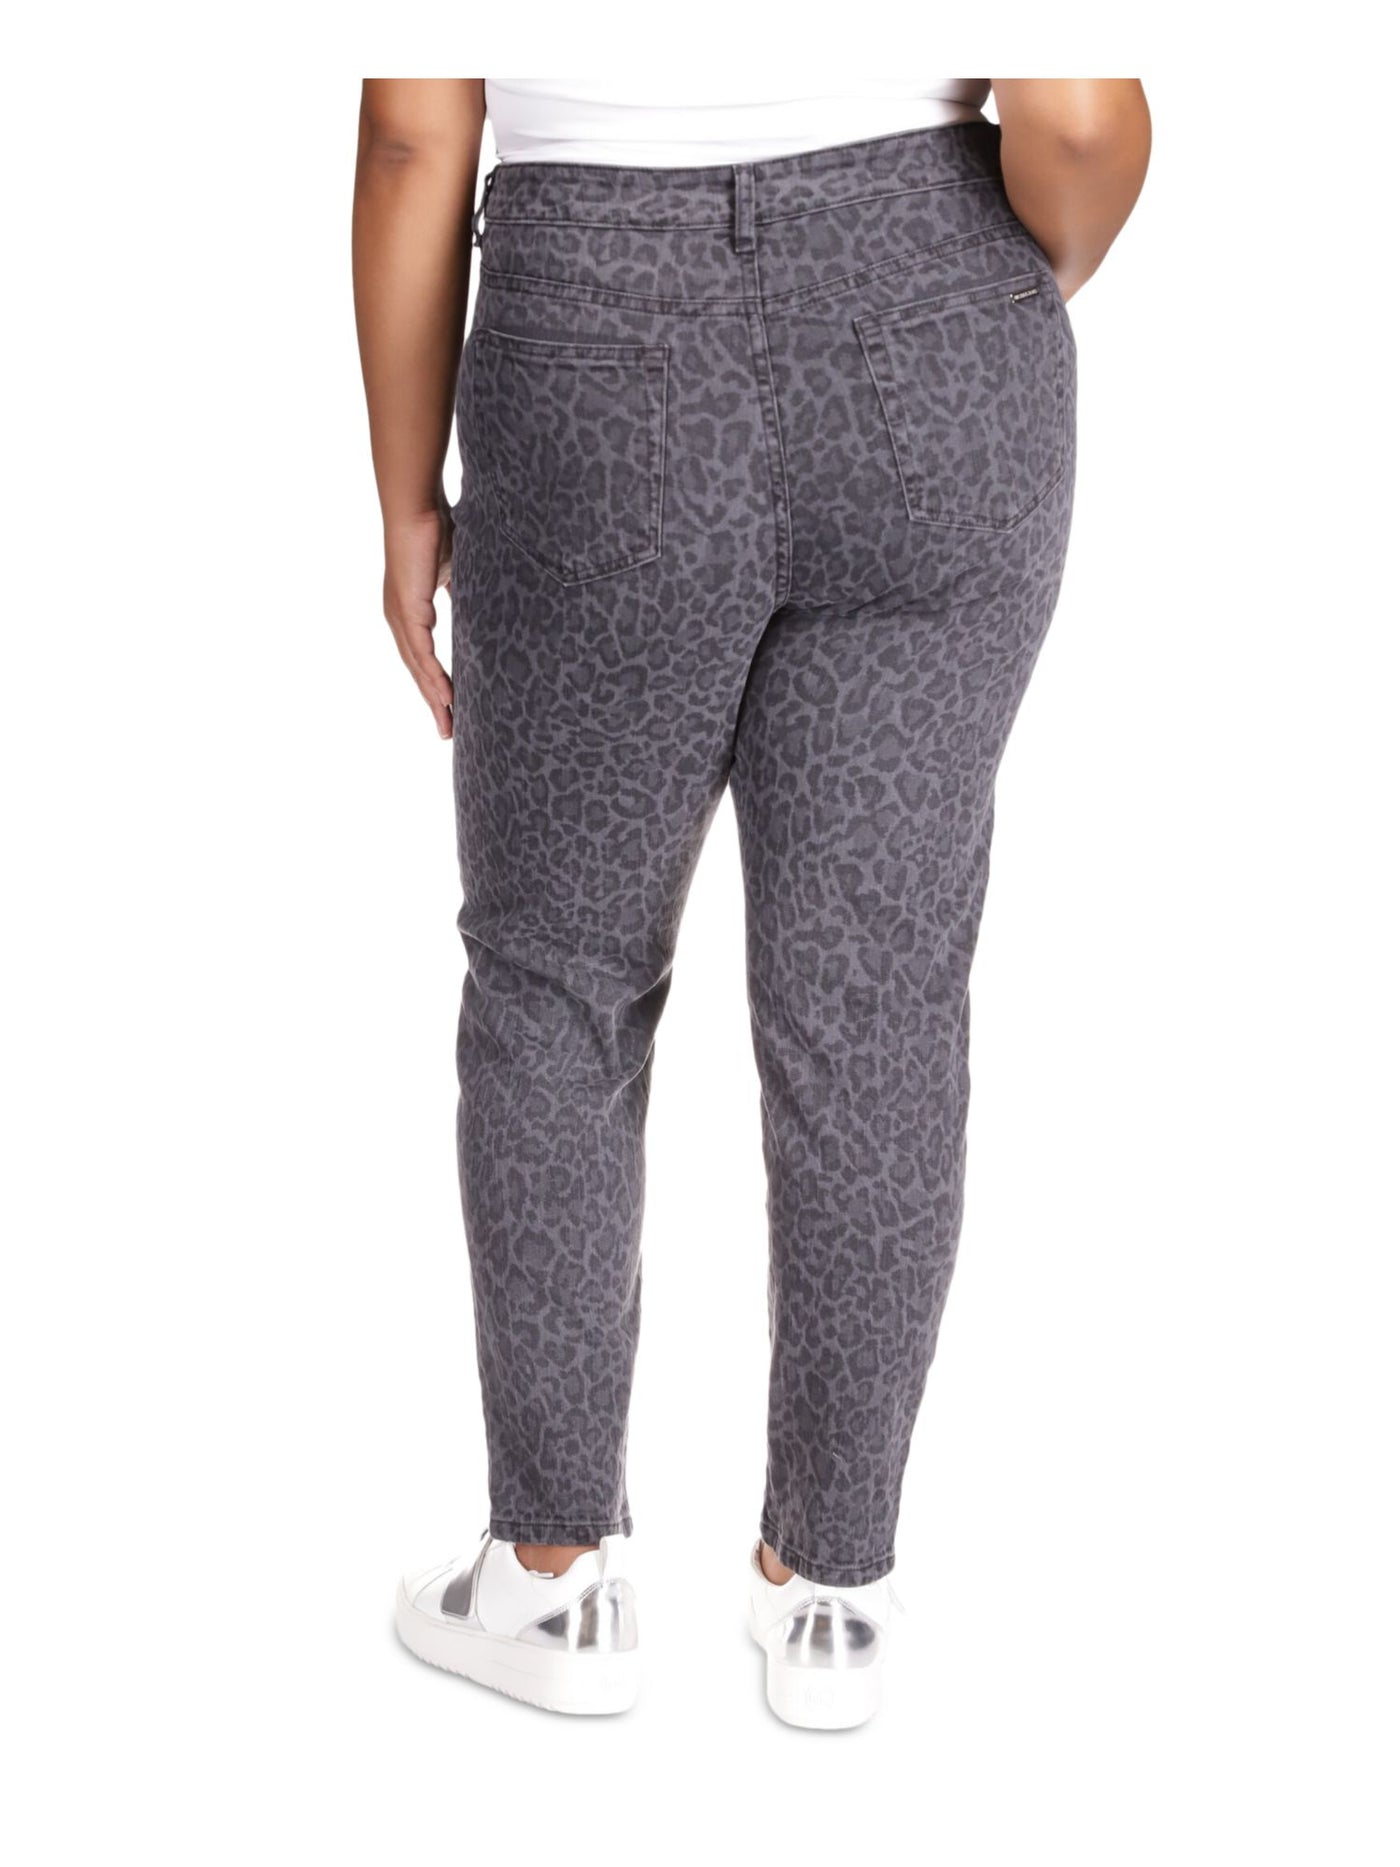 MICHAEL KORS Womens Gray Denim Pocketed Zippered Skinny Stretch Animal Print High Waist Jeans Plus 16W